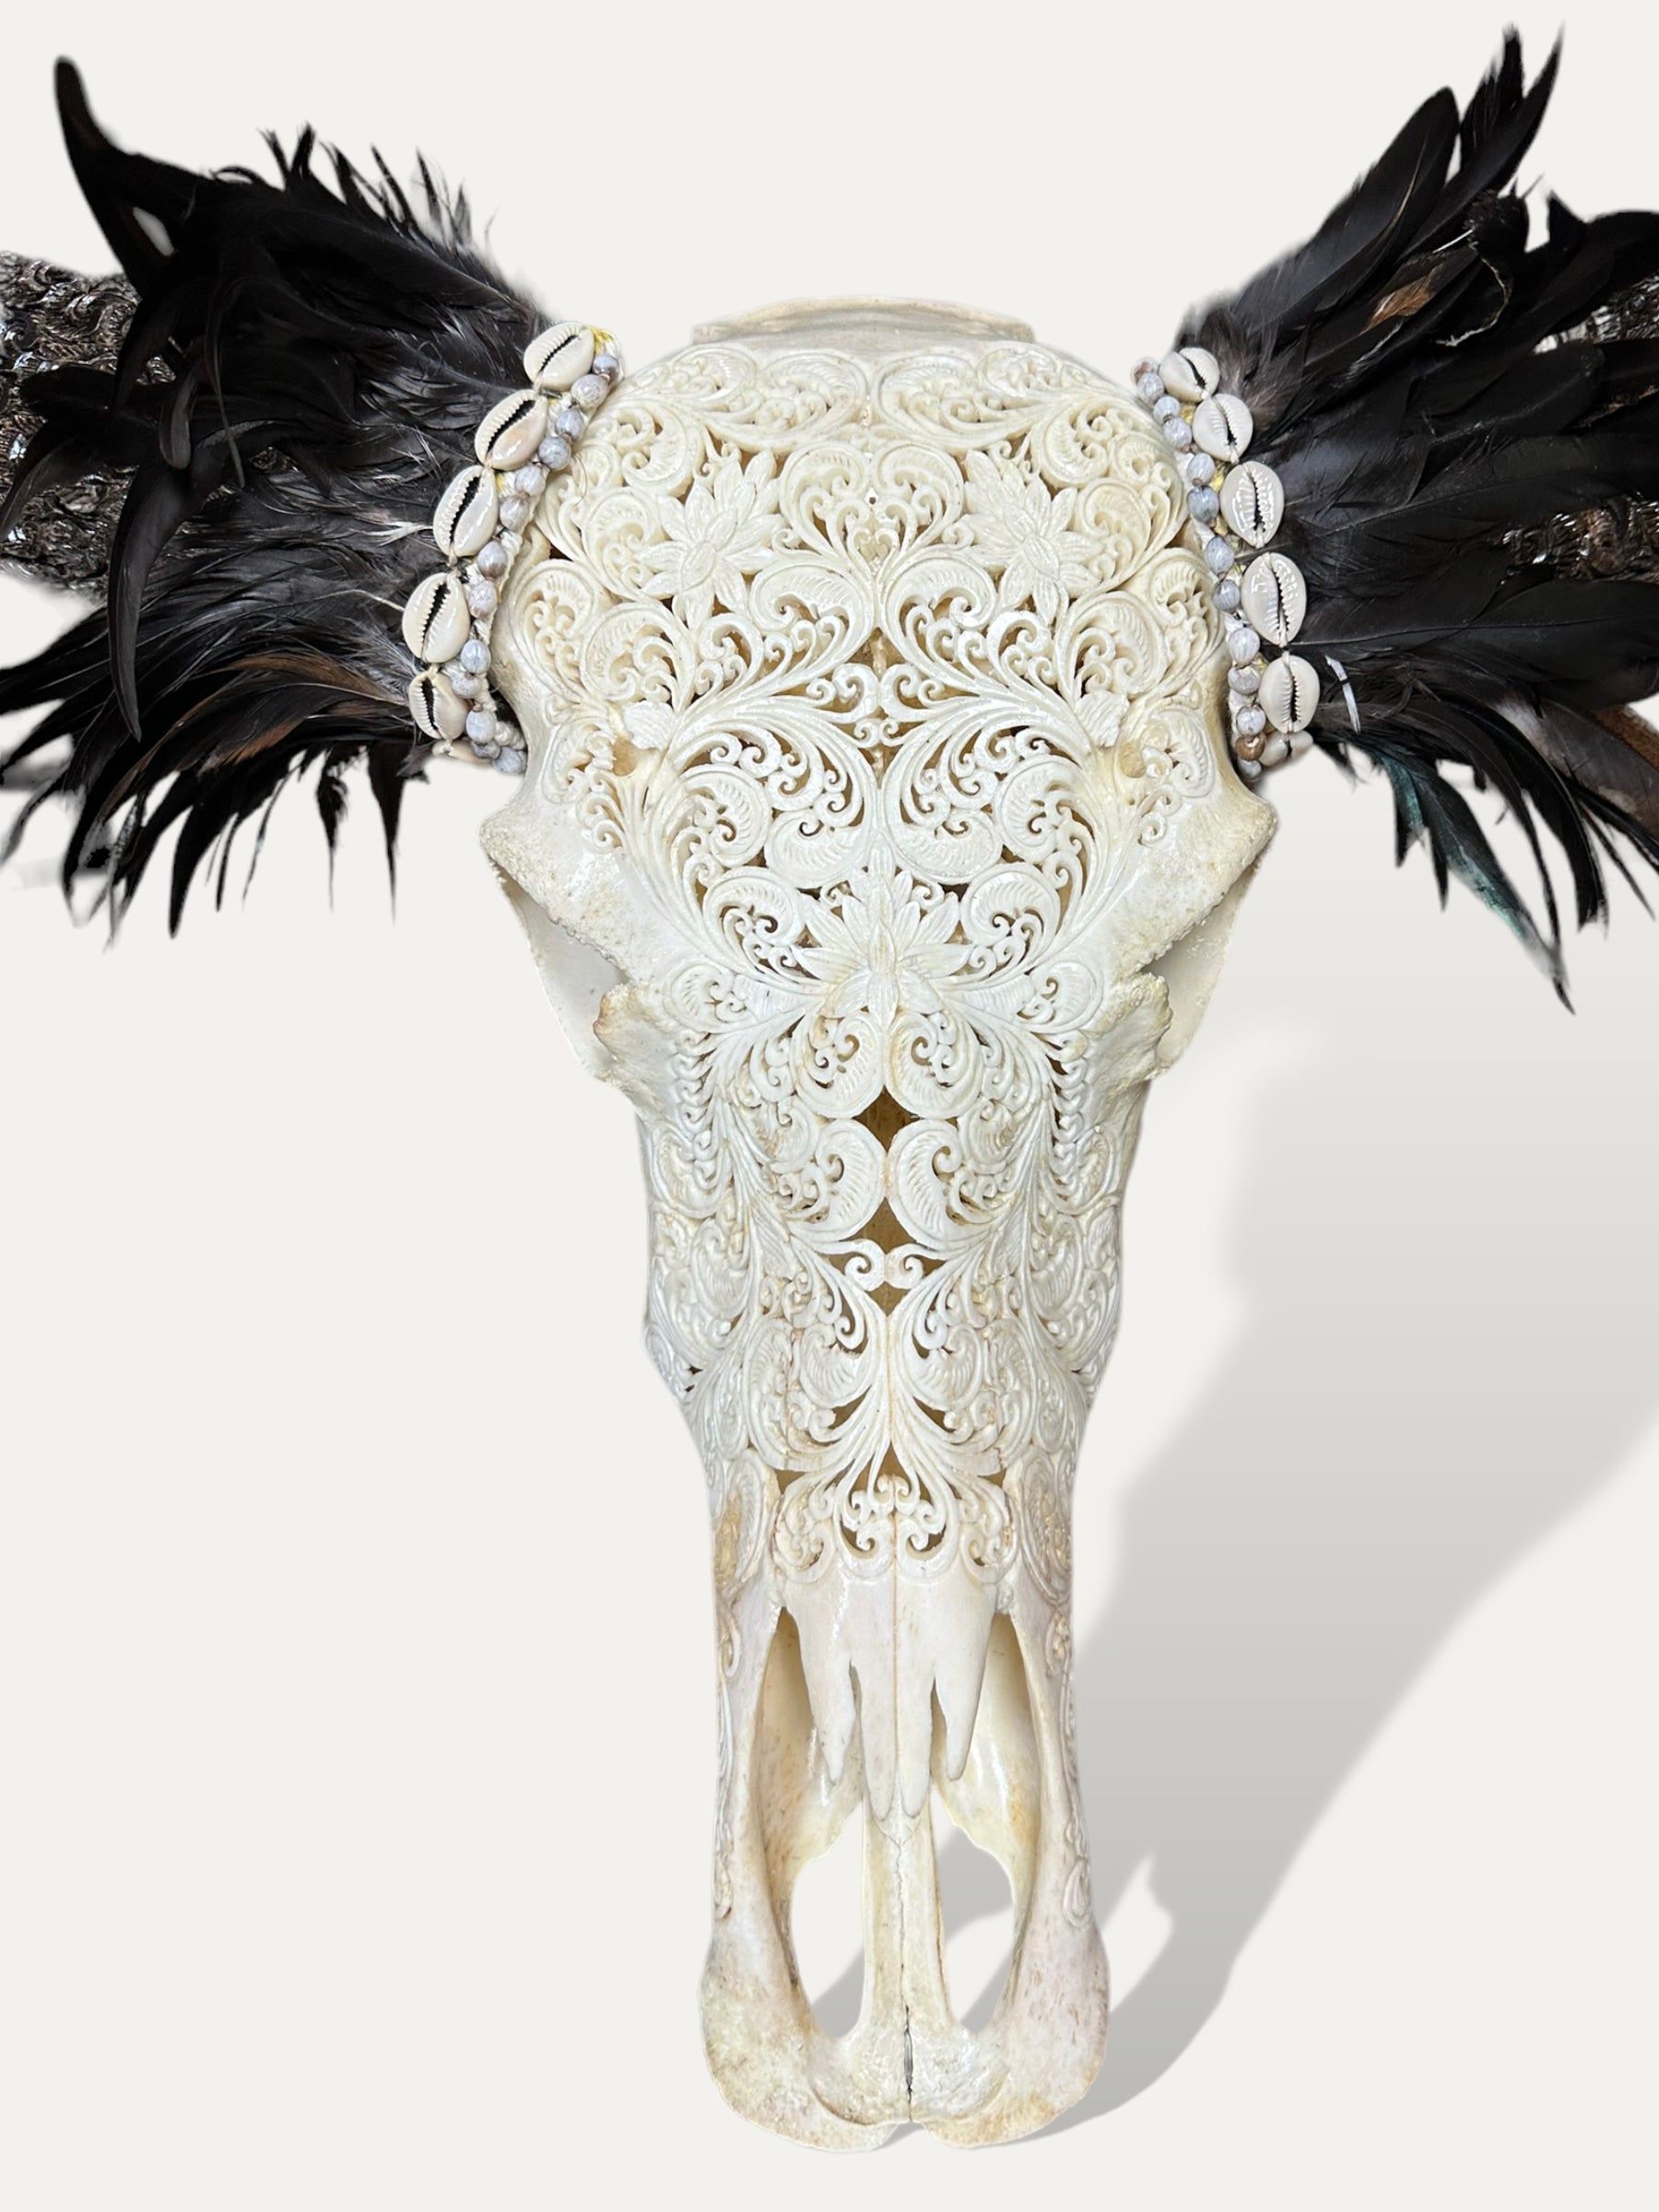 COKOHA - Crâne de buffle sculpté XL - Symphonie